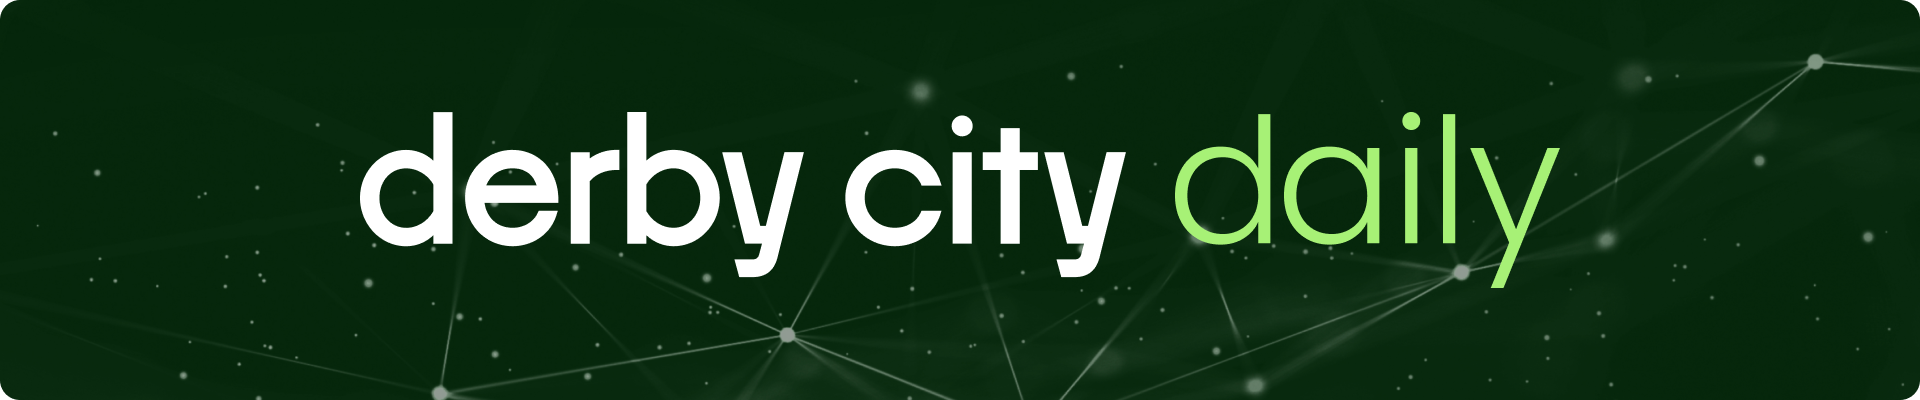 Derby City Daily logo